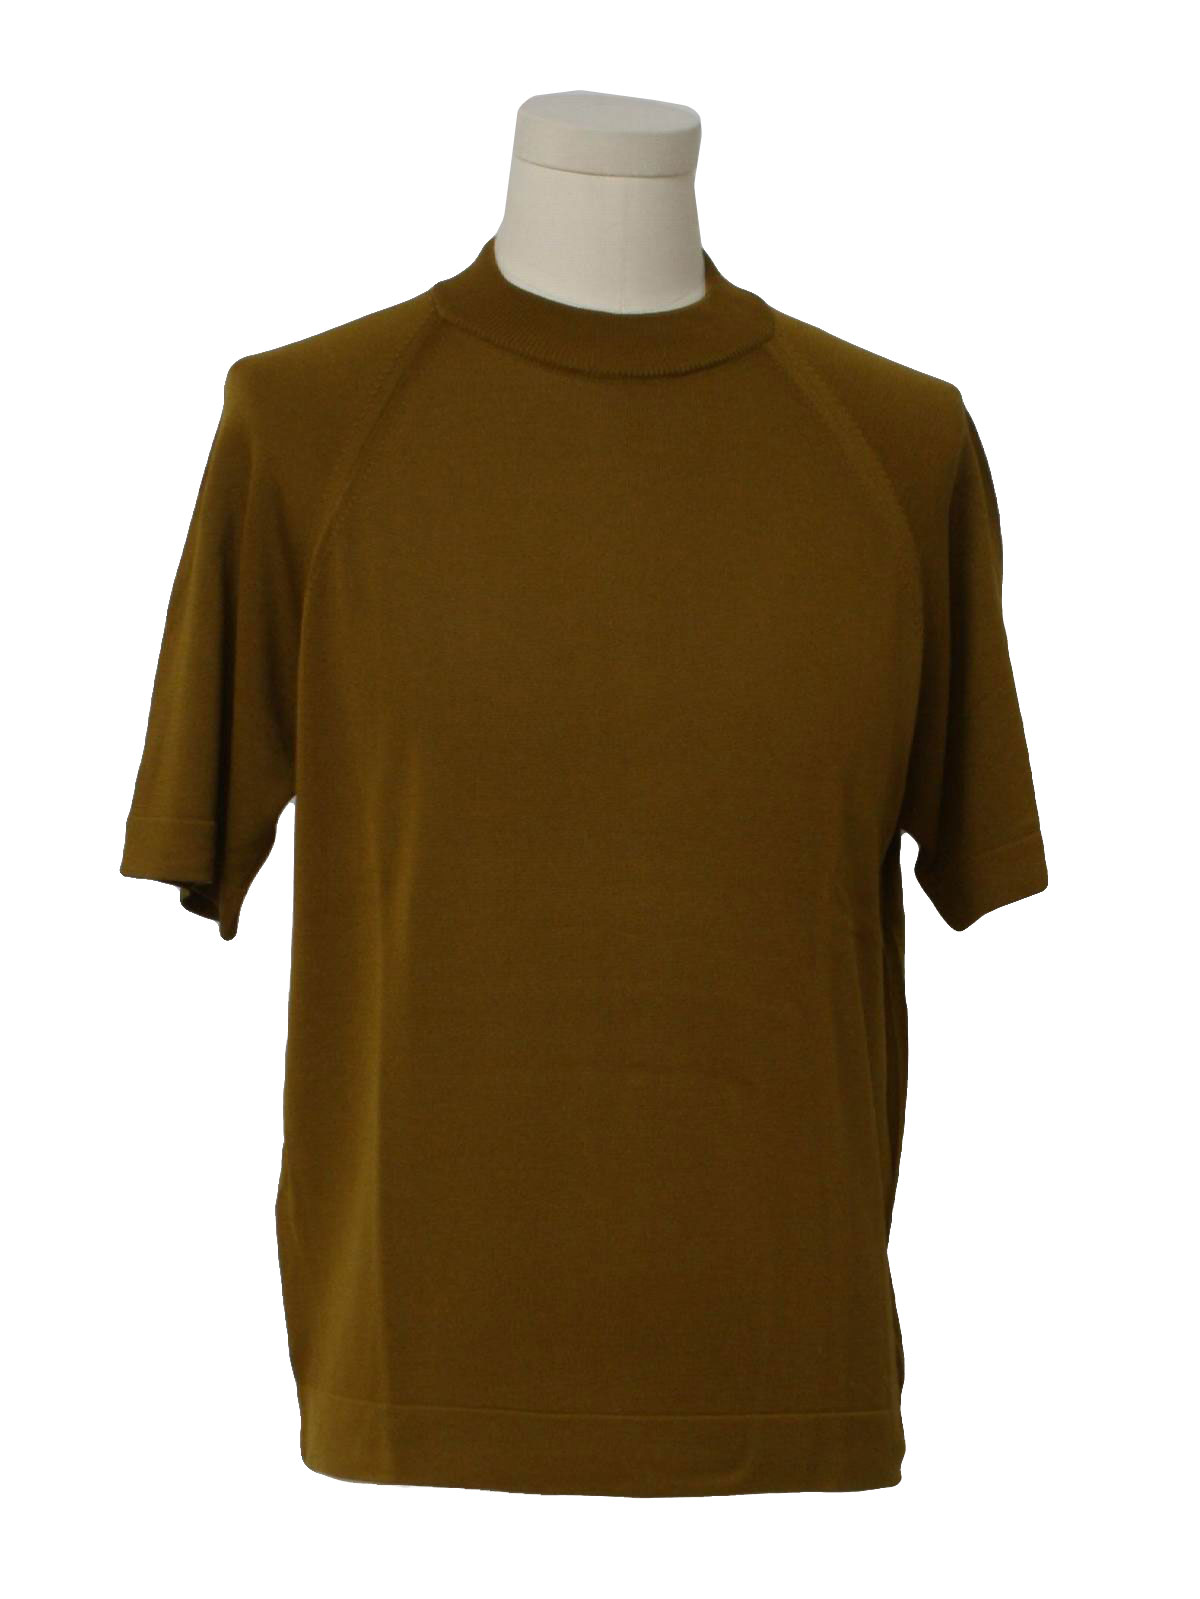 1960s McGregor Knit Shirt: 60s -McGregor- Mens ochre colored, short ...